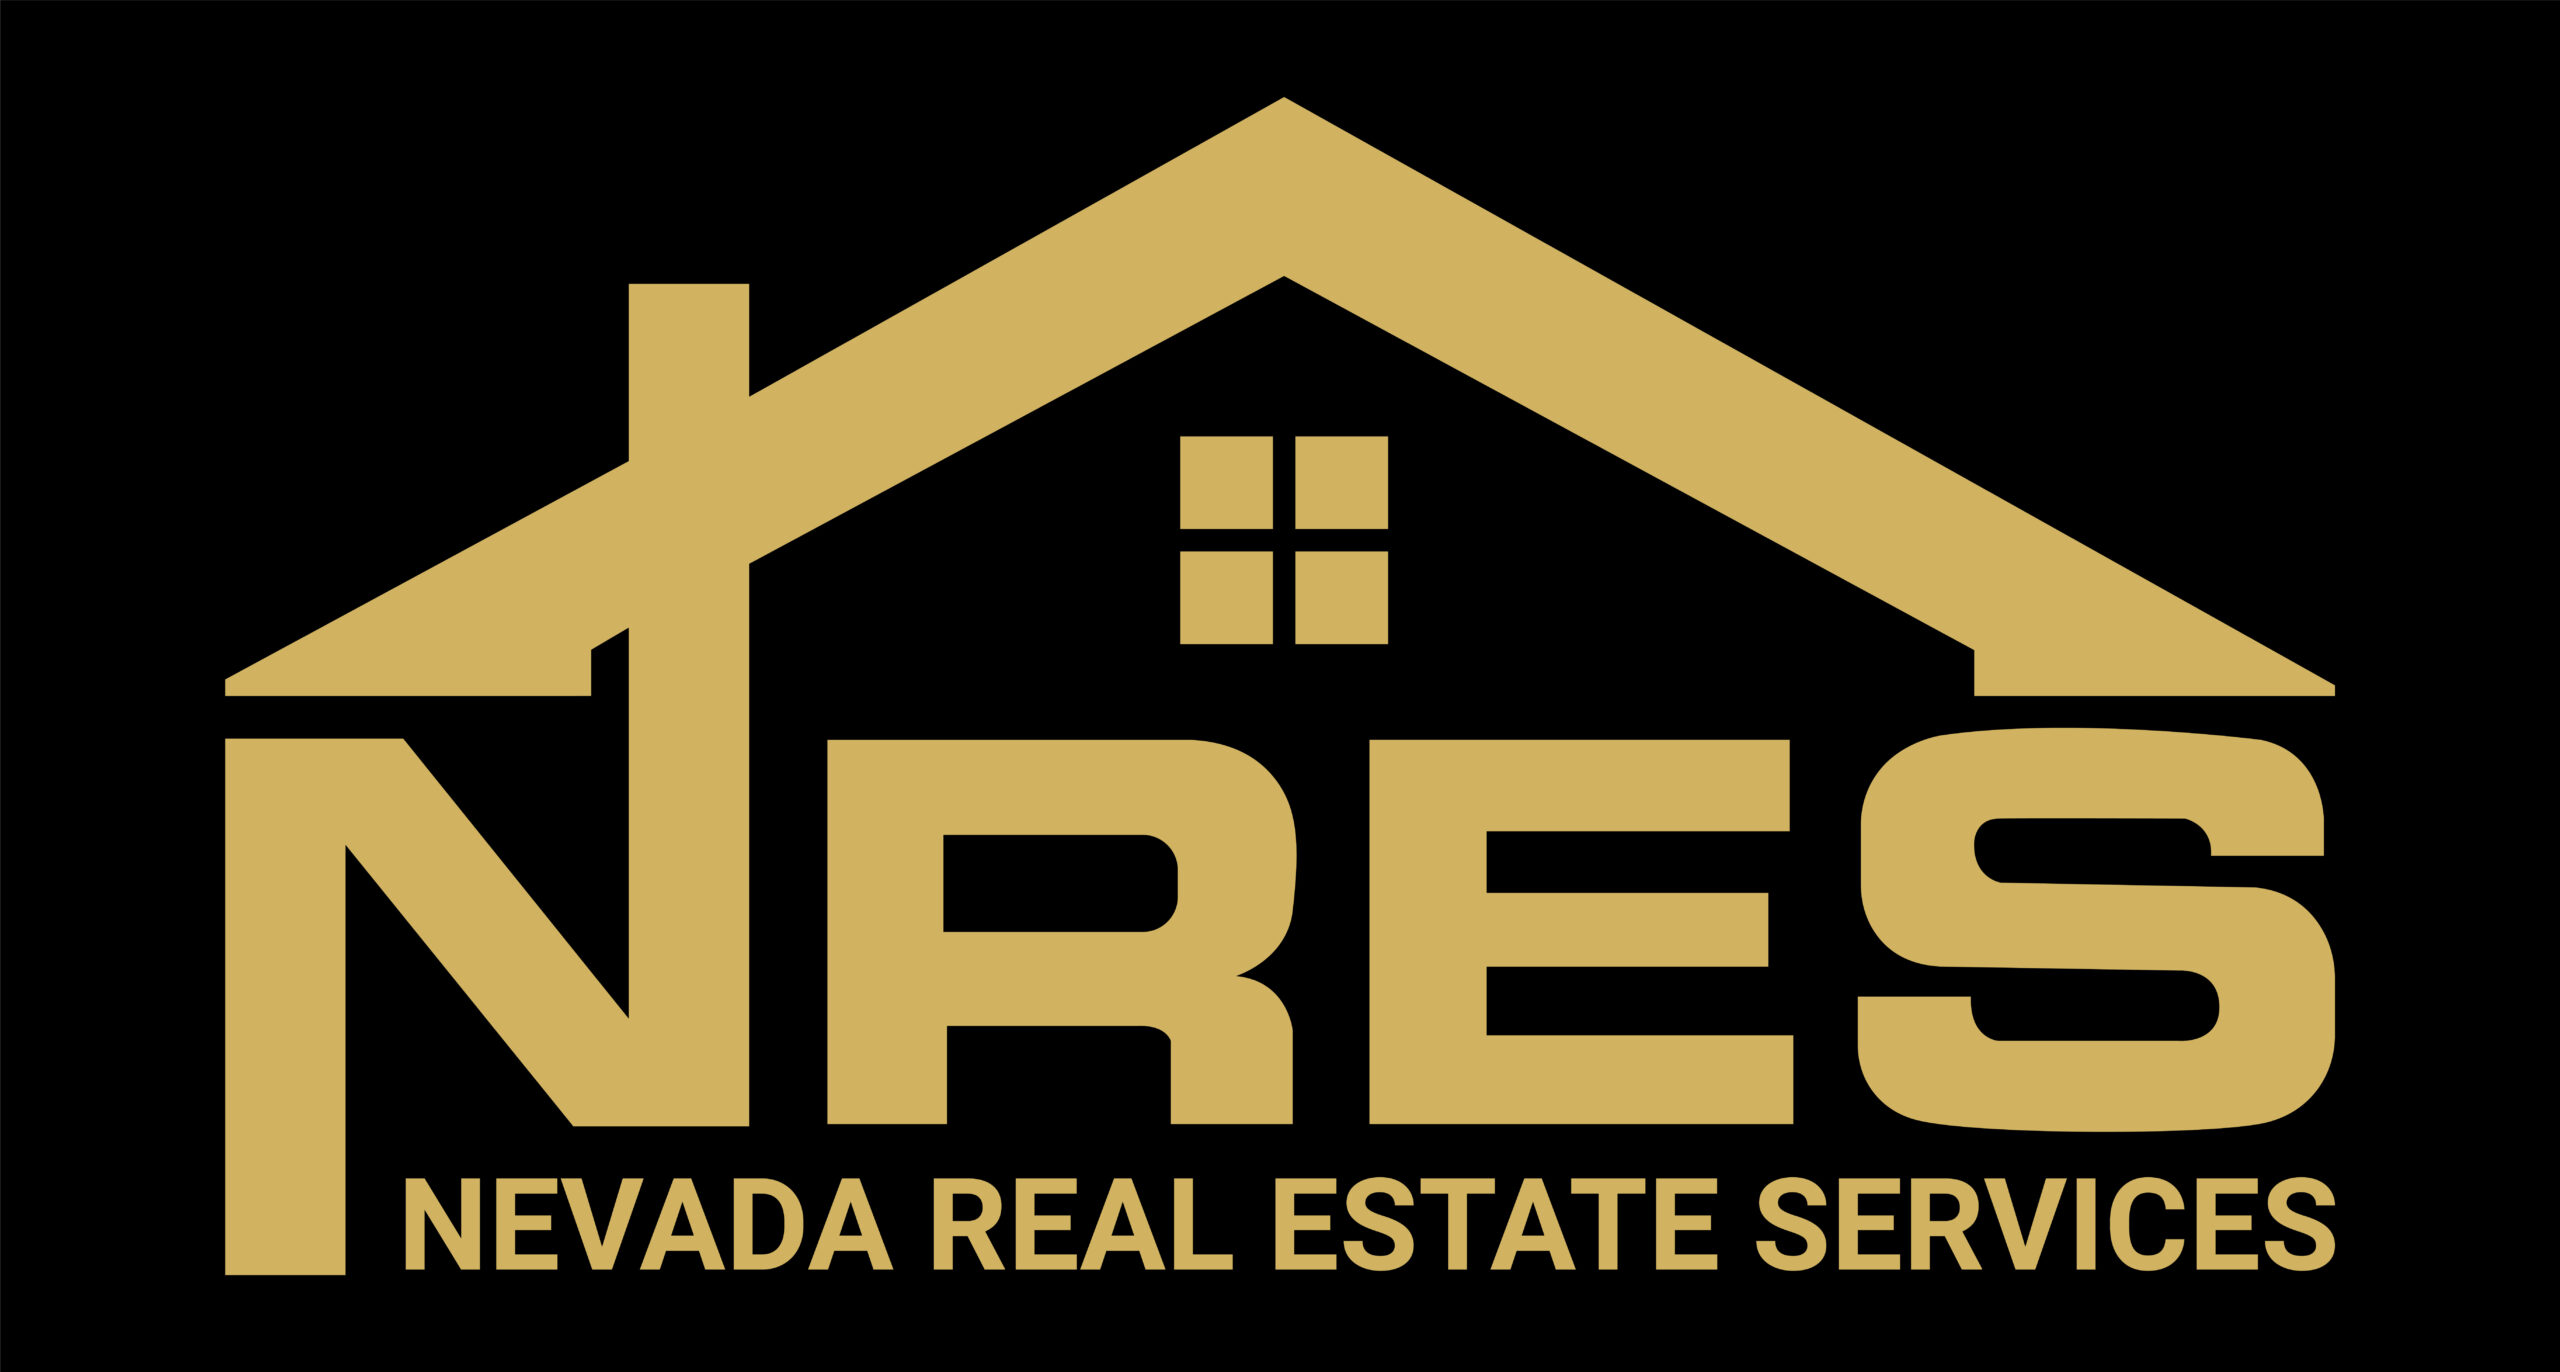 Las Vegas Land Broker in Las Vegas, Nevada 702-898-2400